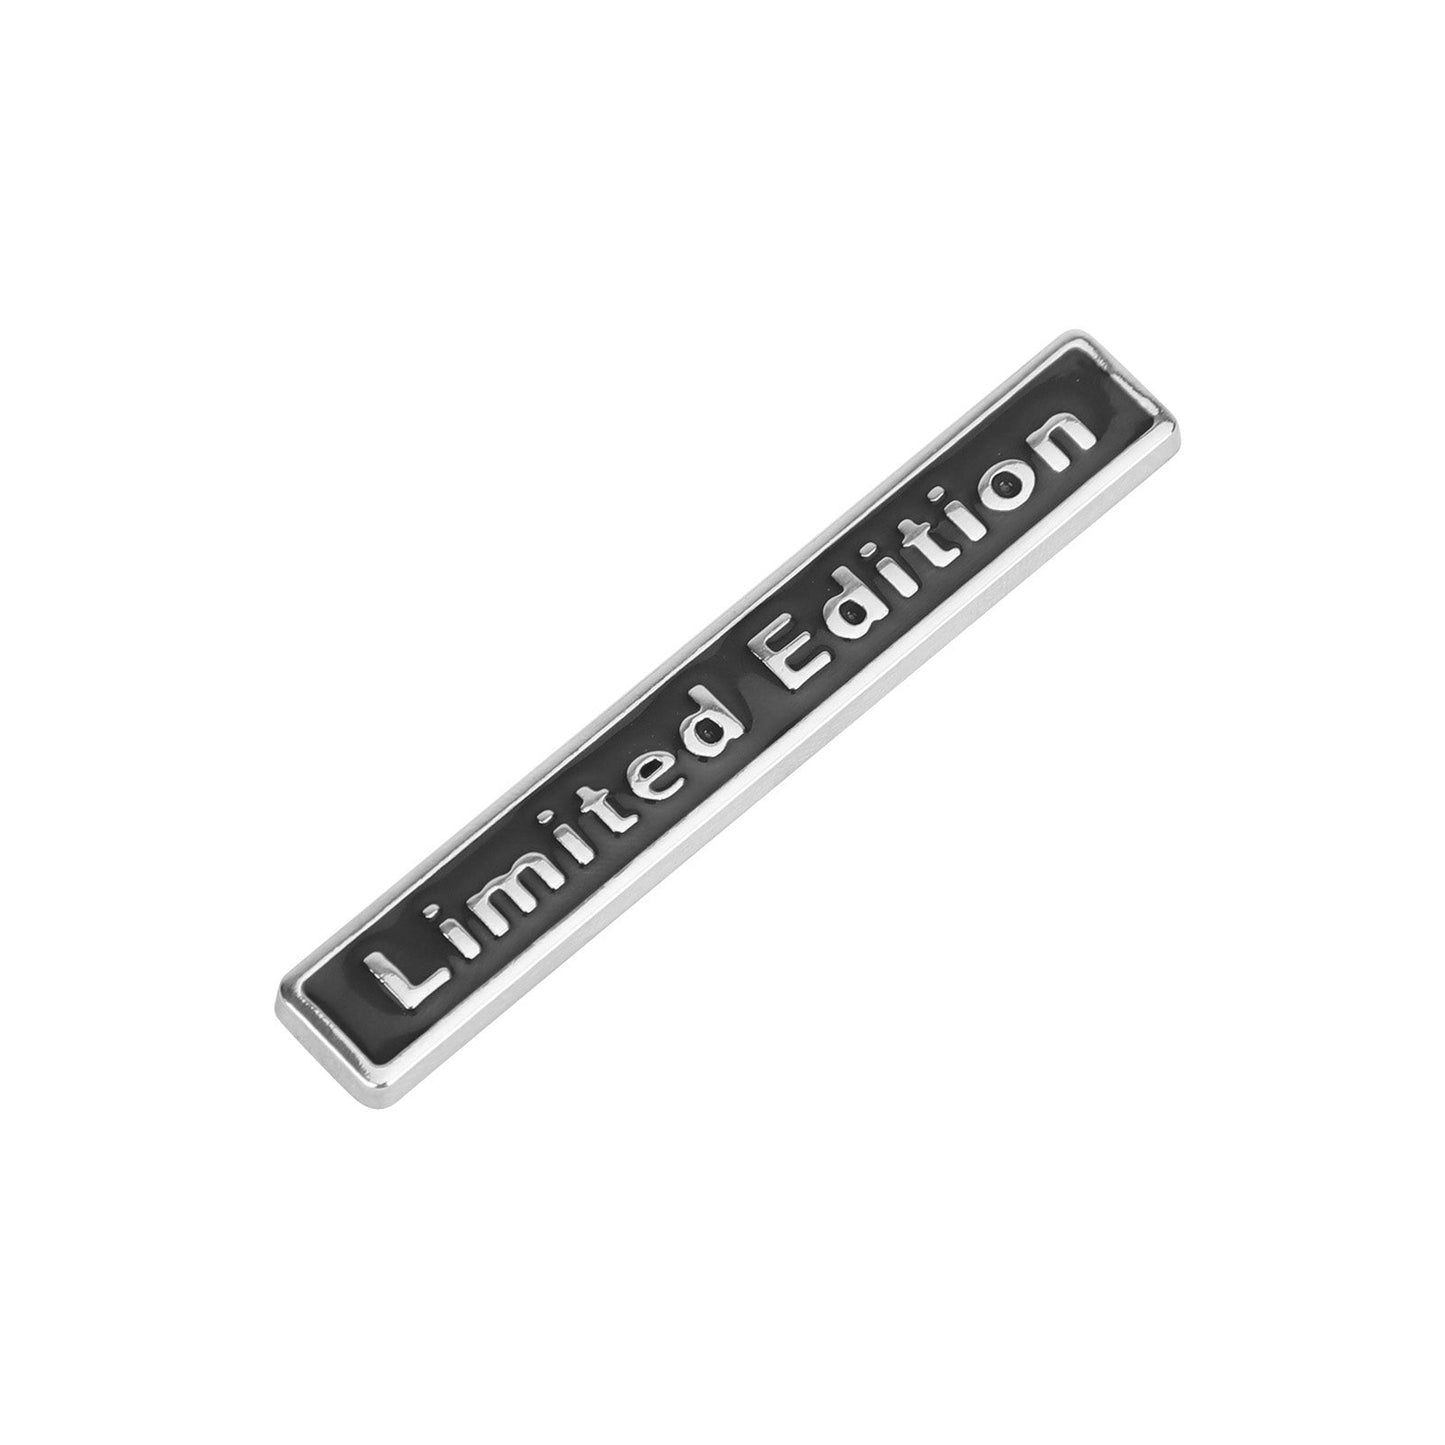 3D Car Sticker Plating Metal Limited Edition Logo Emblem Badge Decal #B